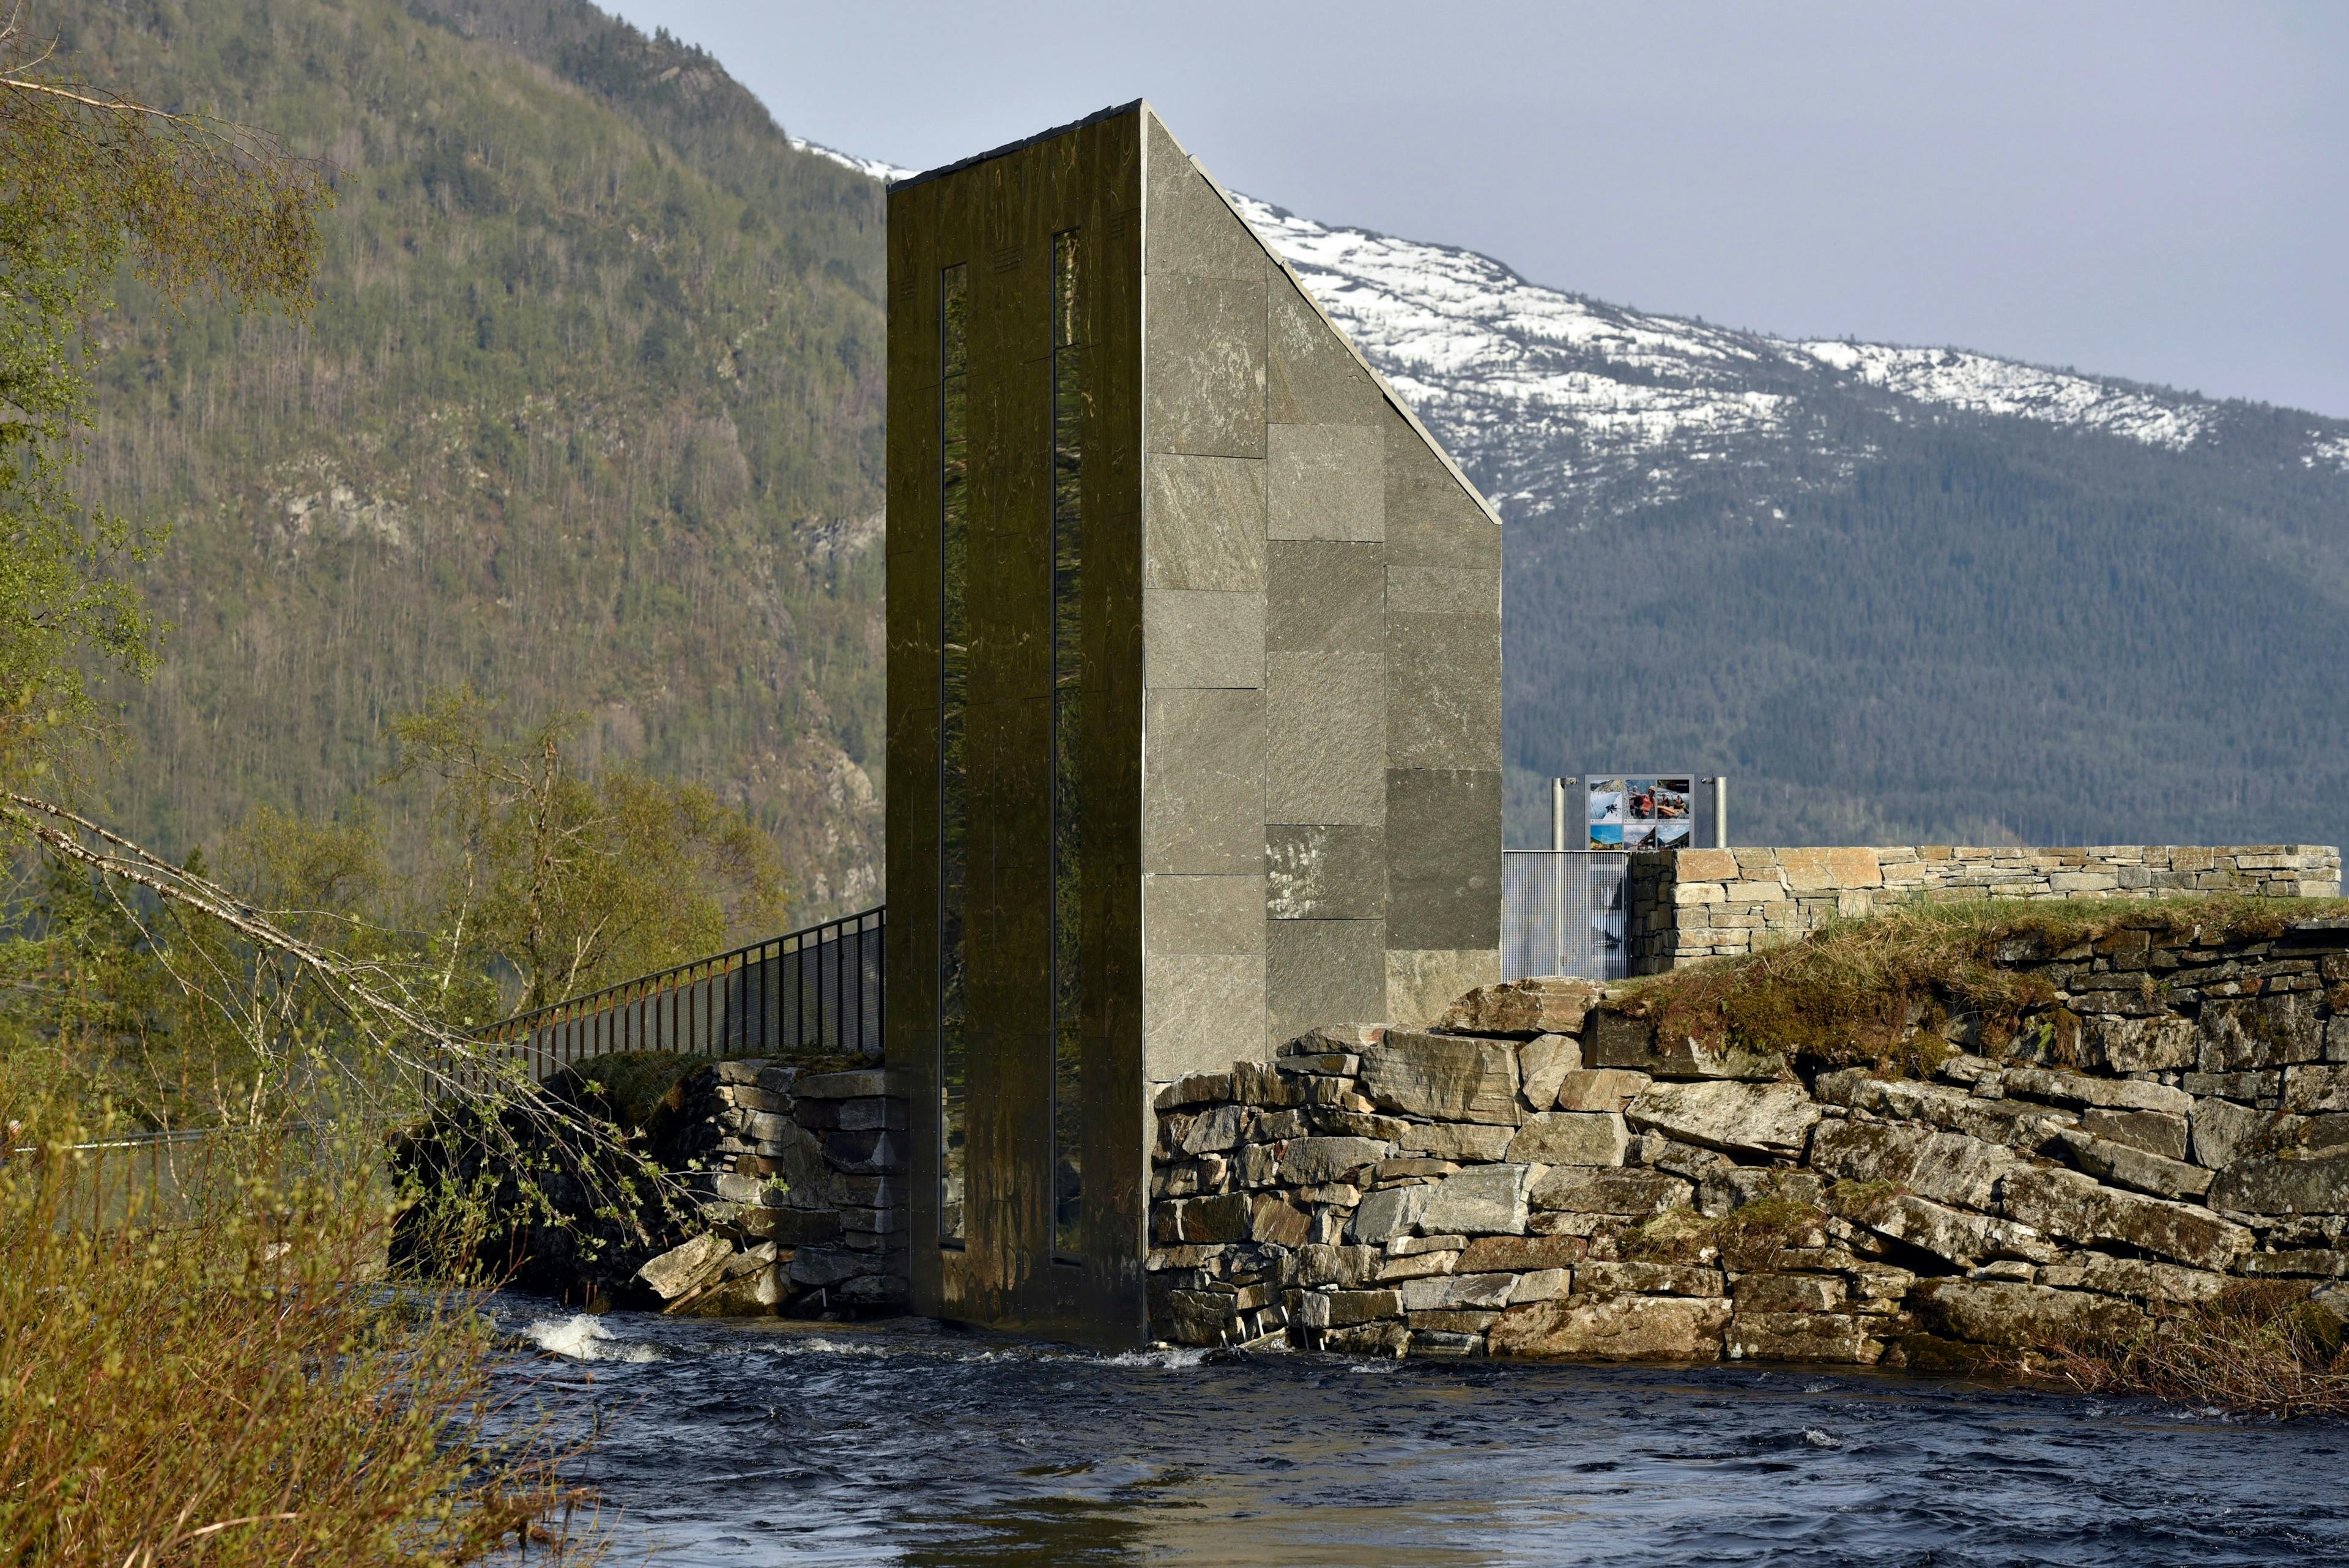 Toilet in Norway